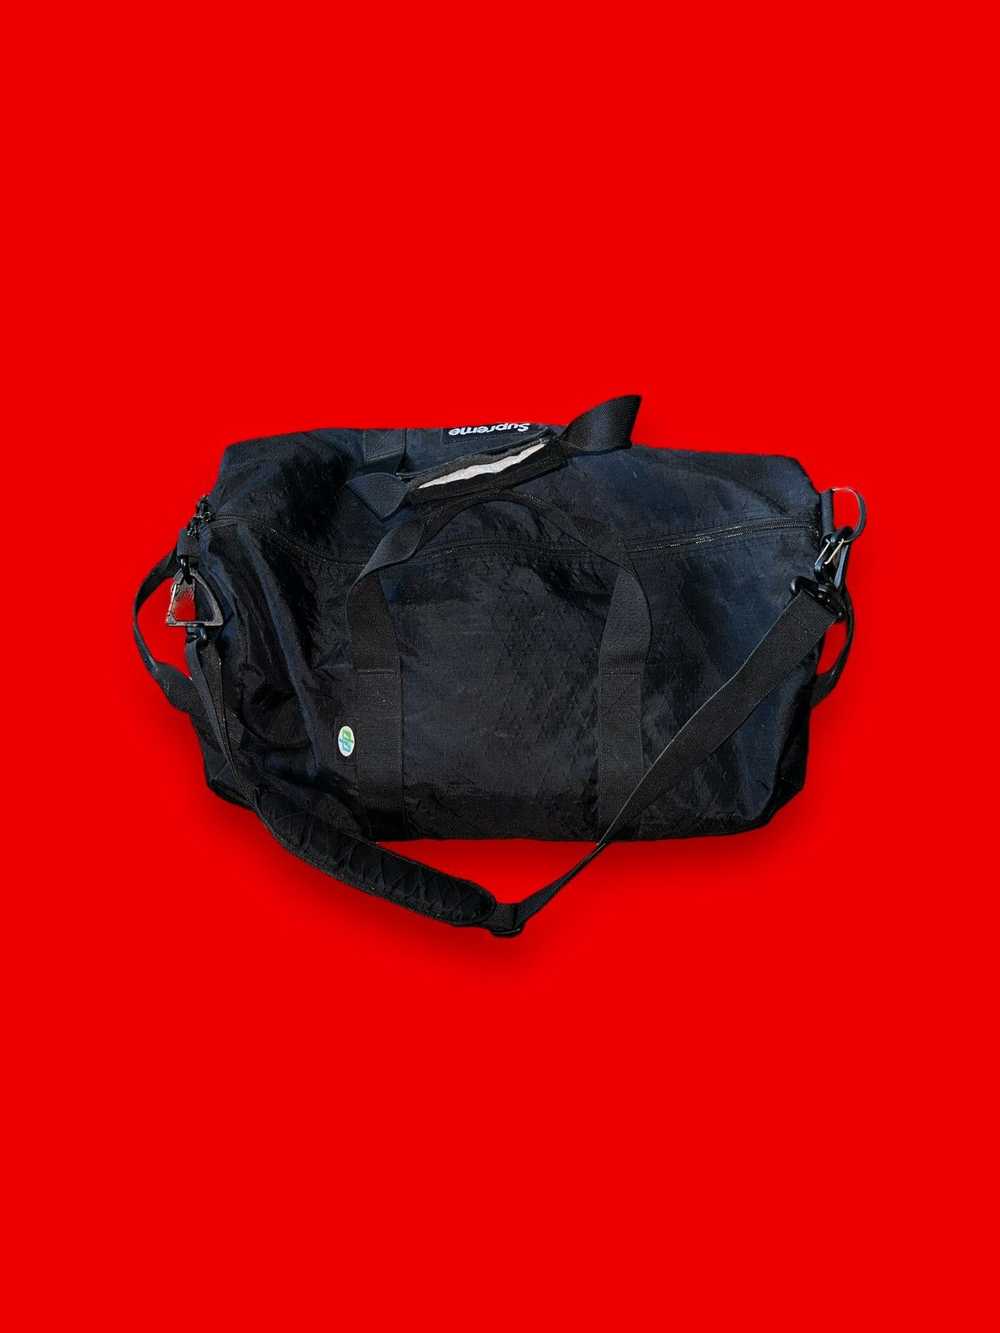 Supreme Supreme duffel bag - image 3